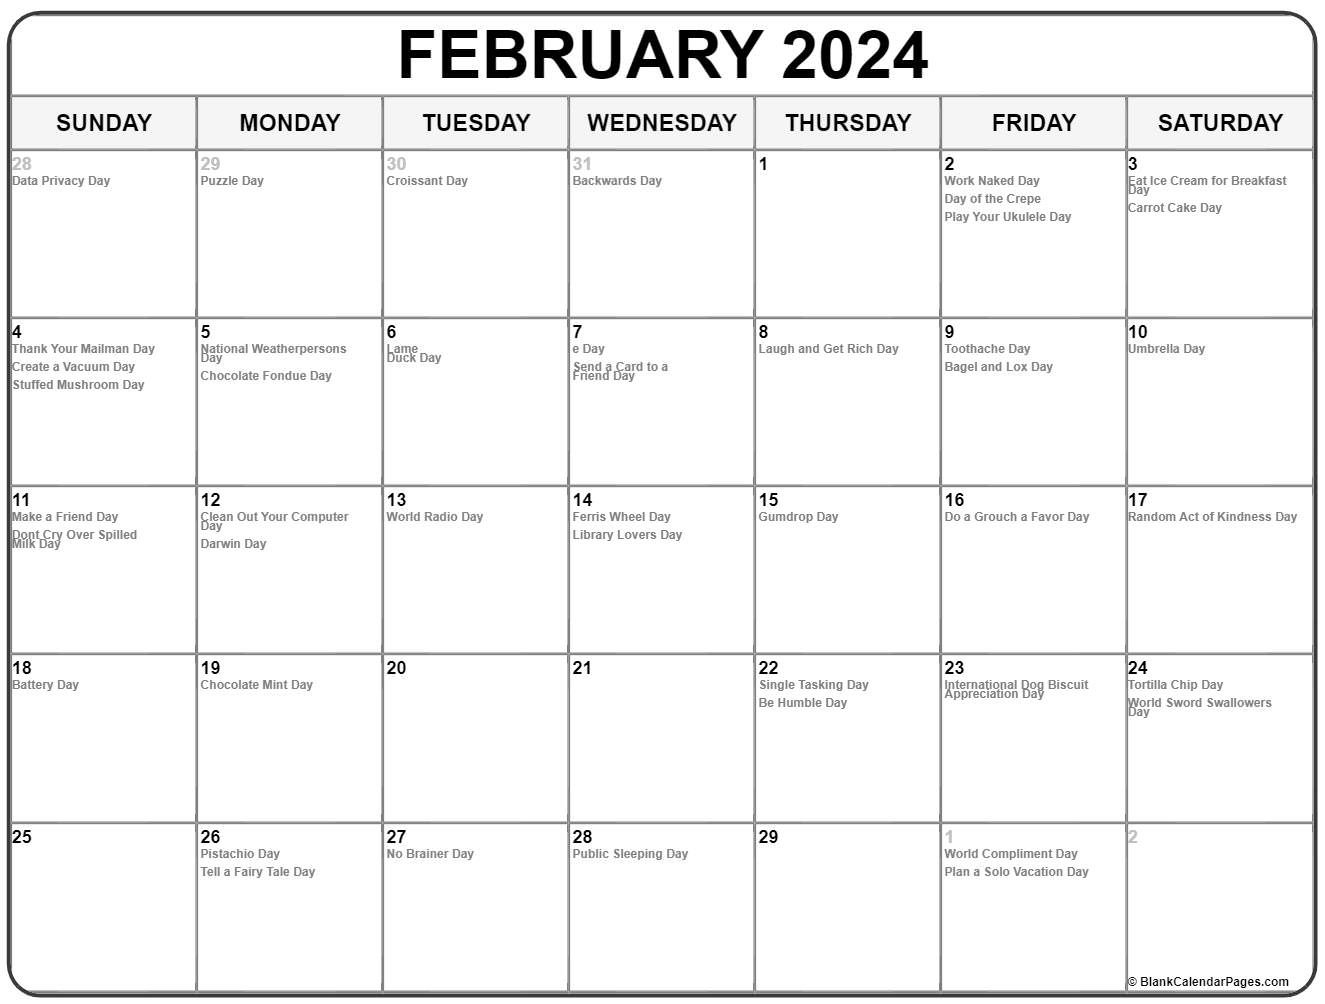 February 2022 Calendar With Holidays Usa February 2022 With Holidays Calendar